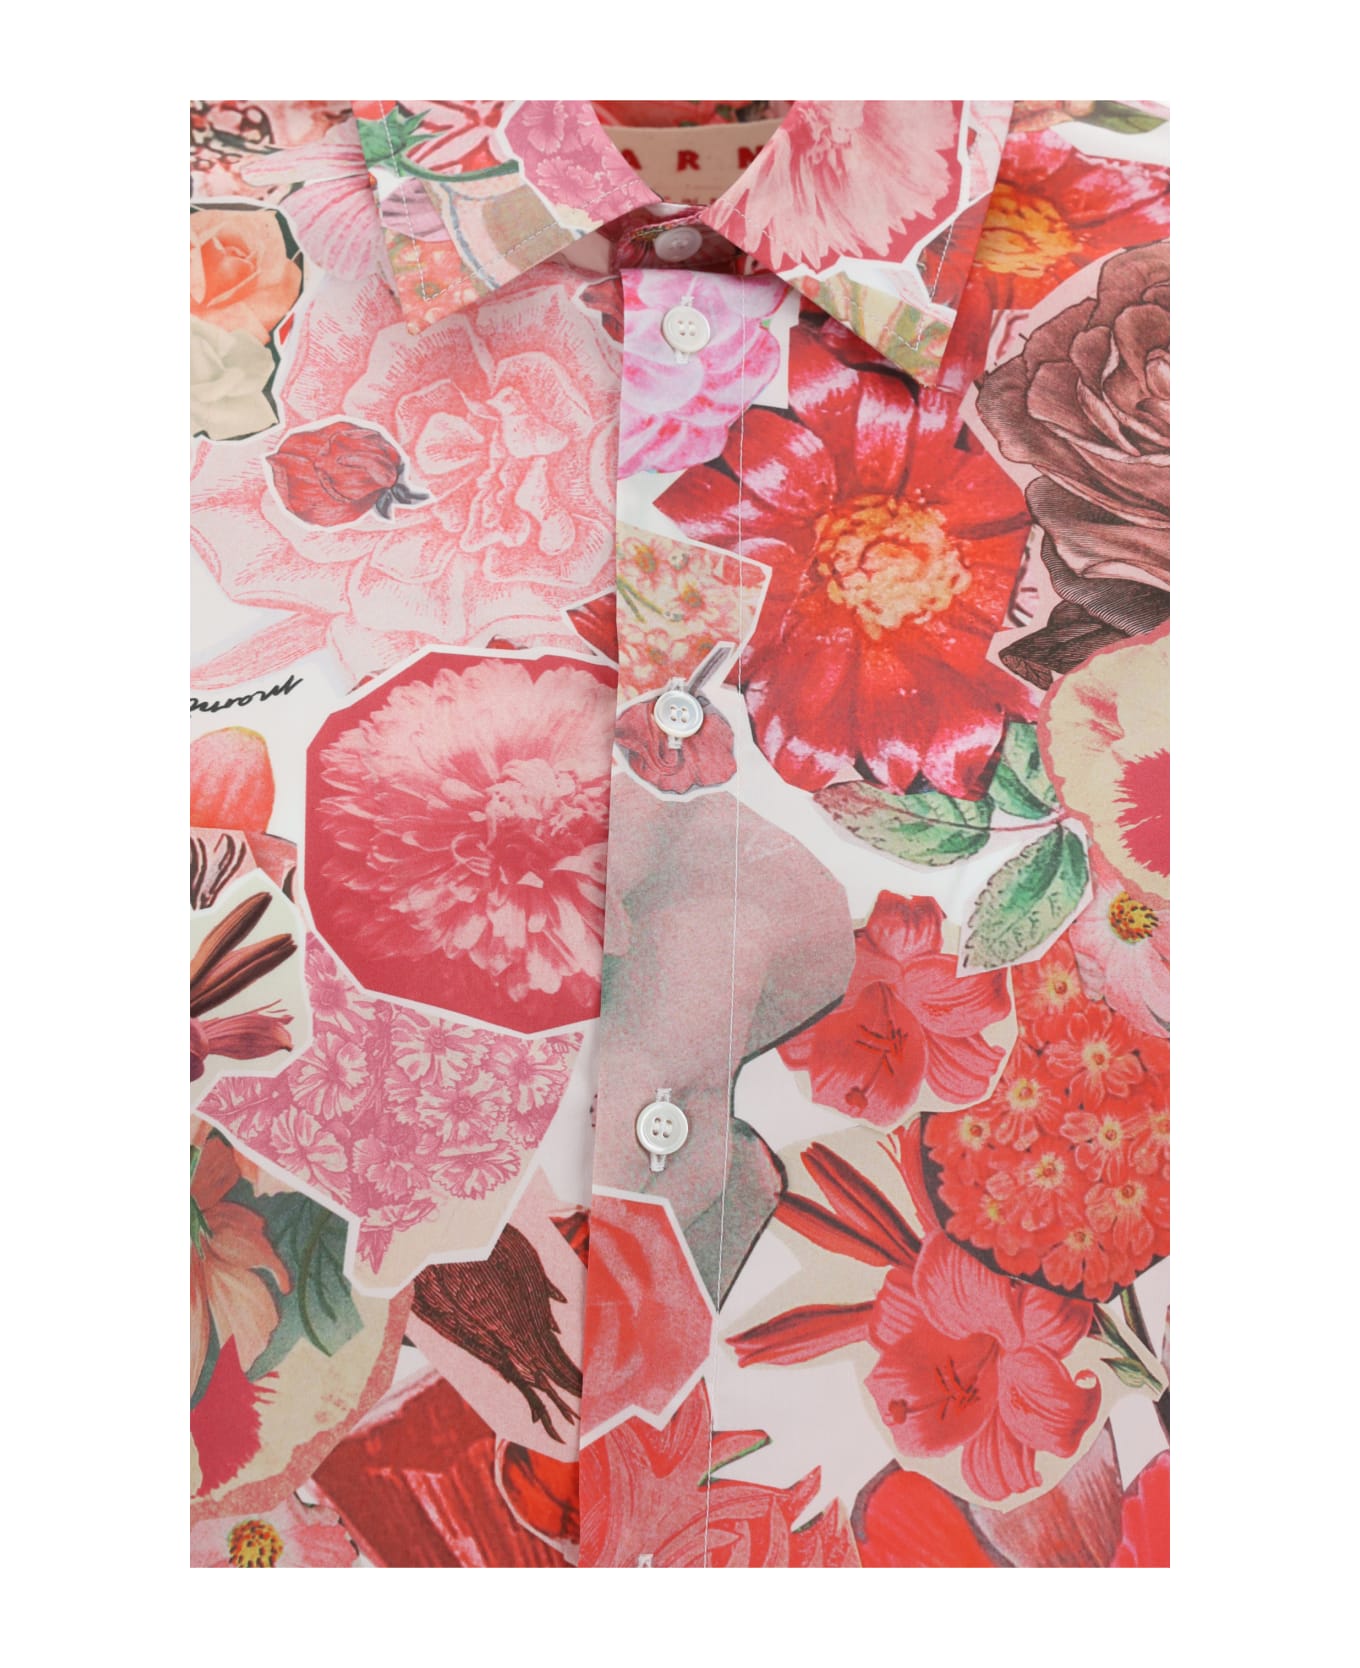 Marni Pink Sleeveless Shirt With Flower Requiem Print - Pink Clematis